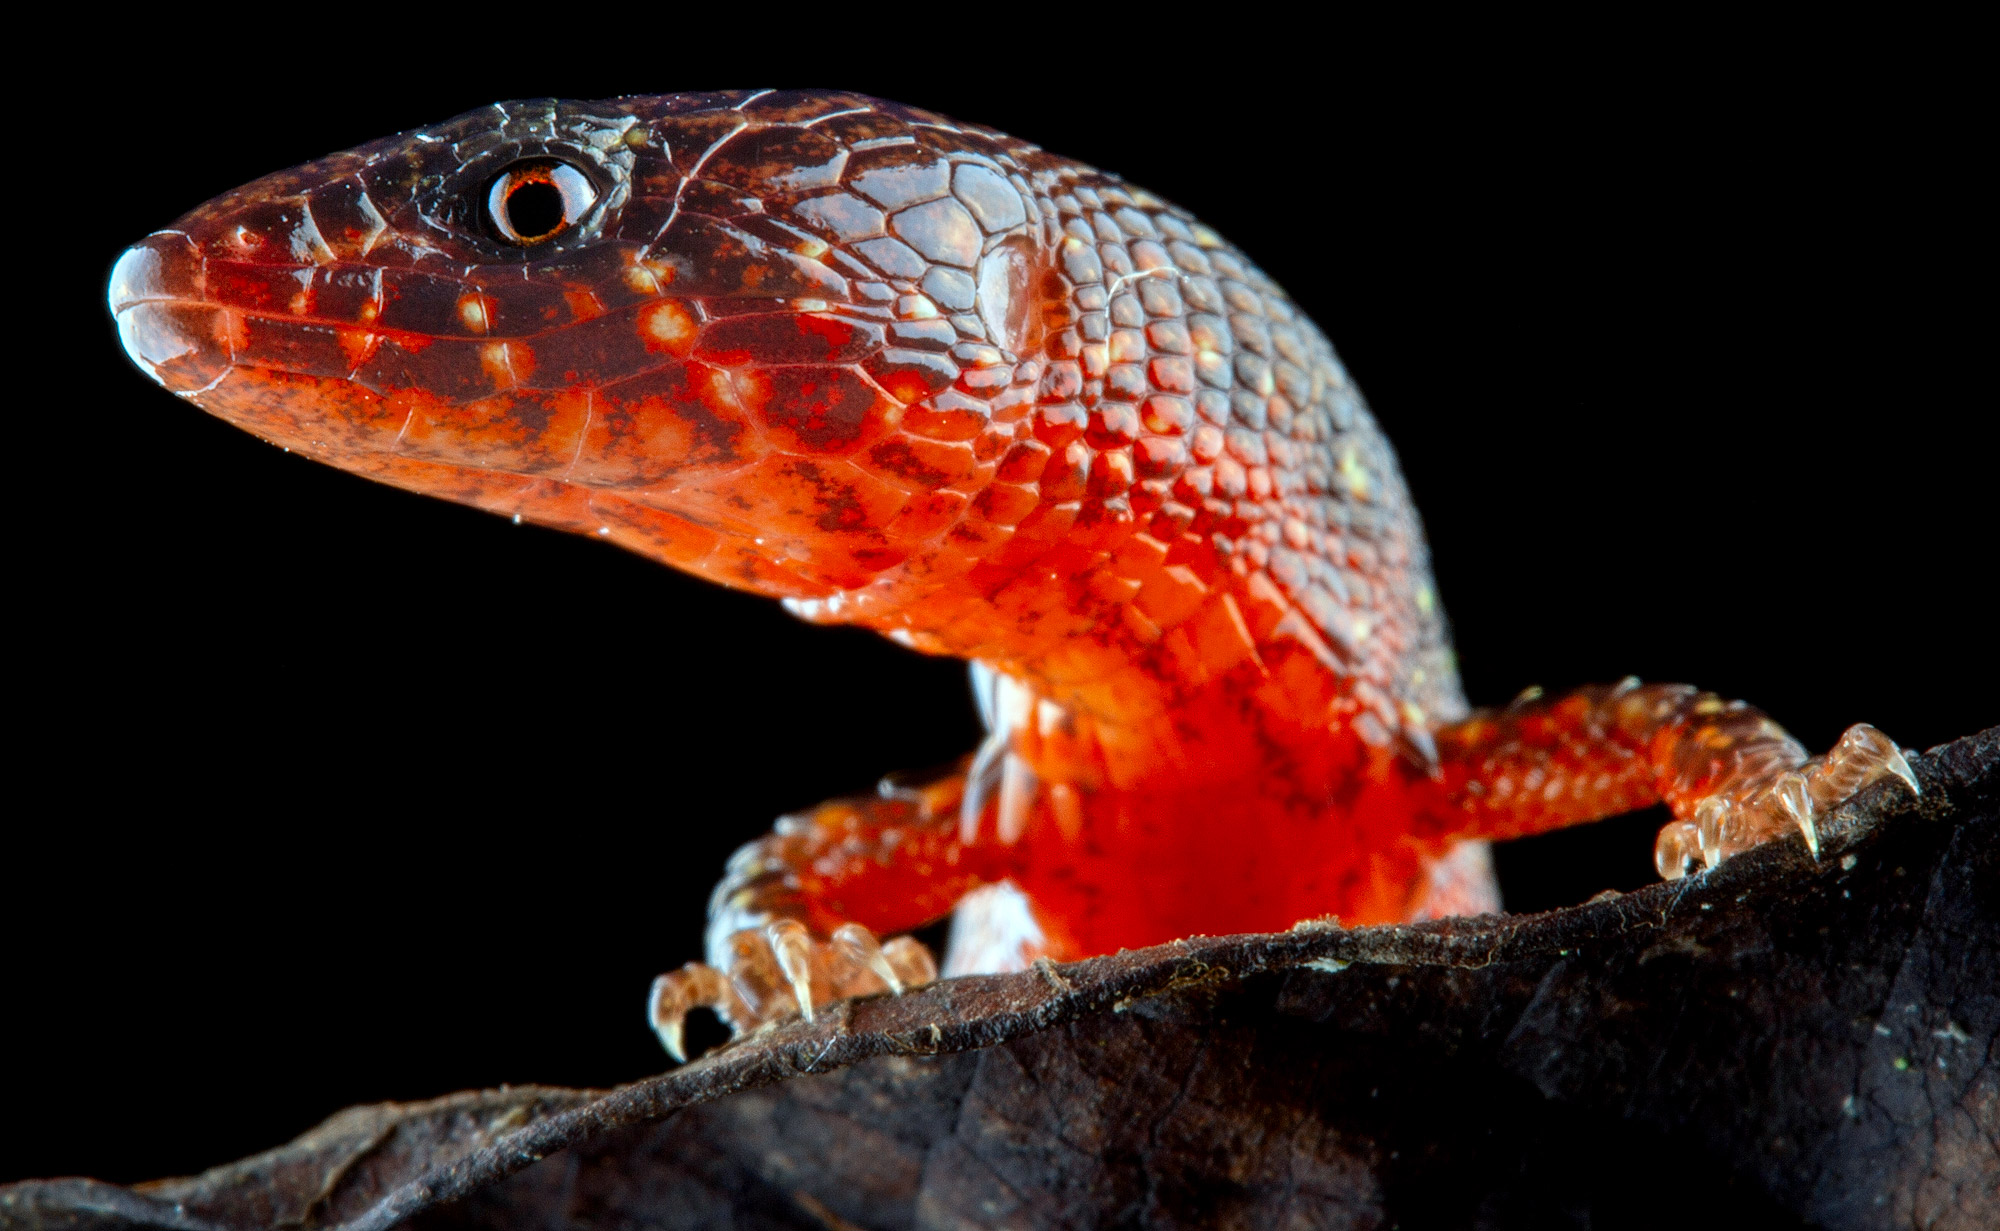 Close up photo of a new species of lighbulb lizard